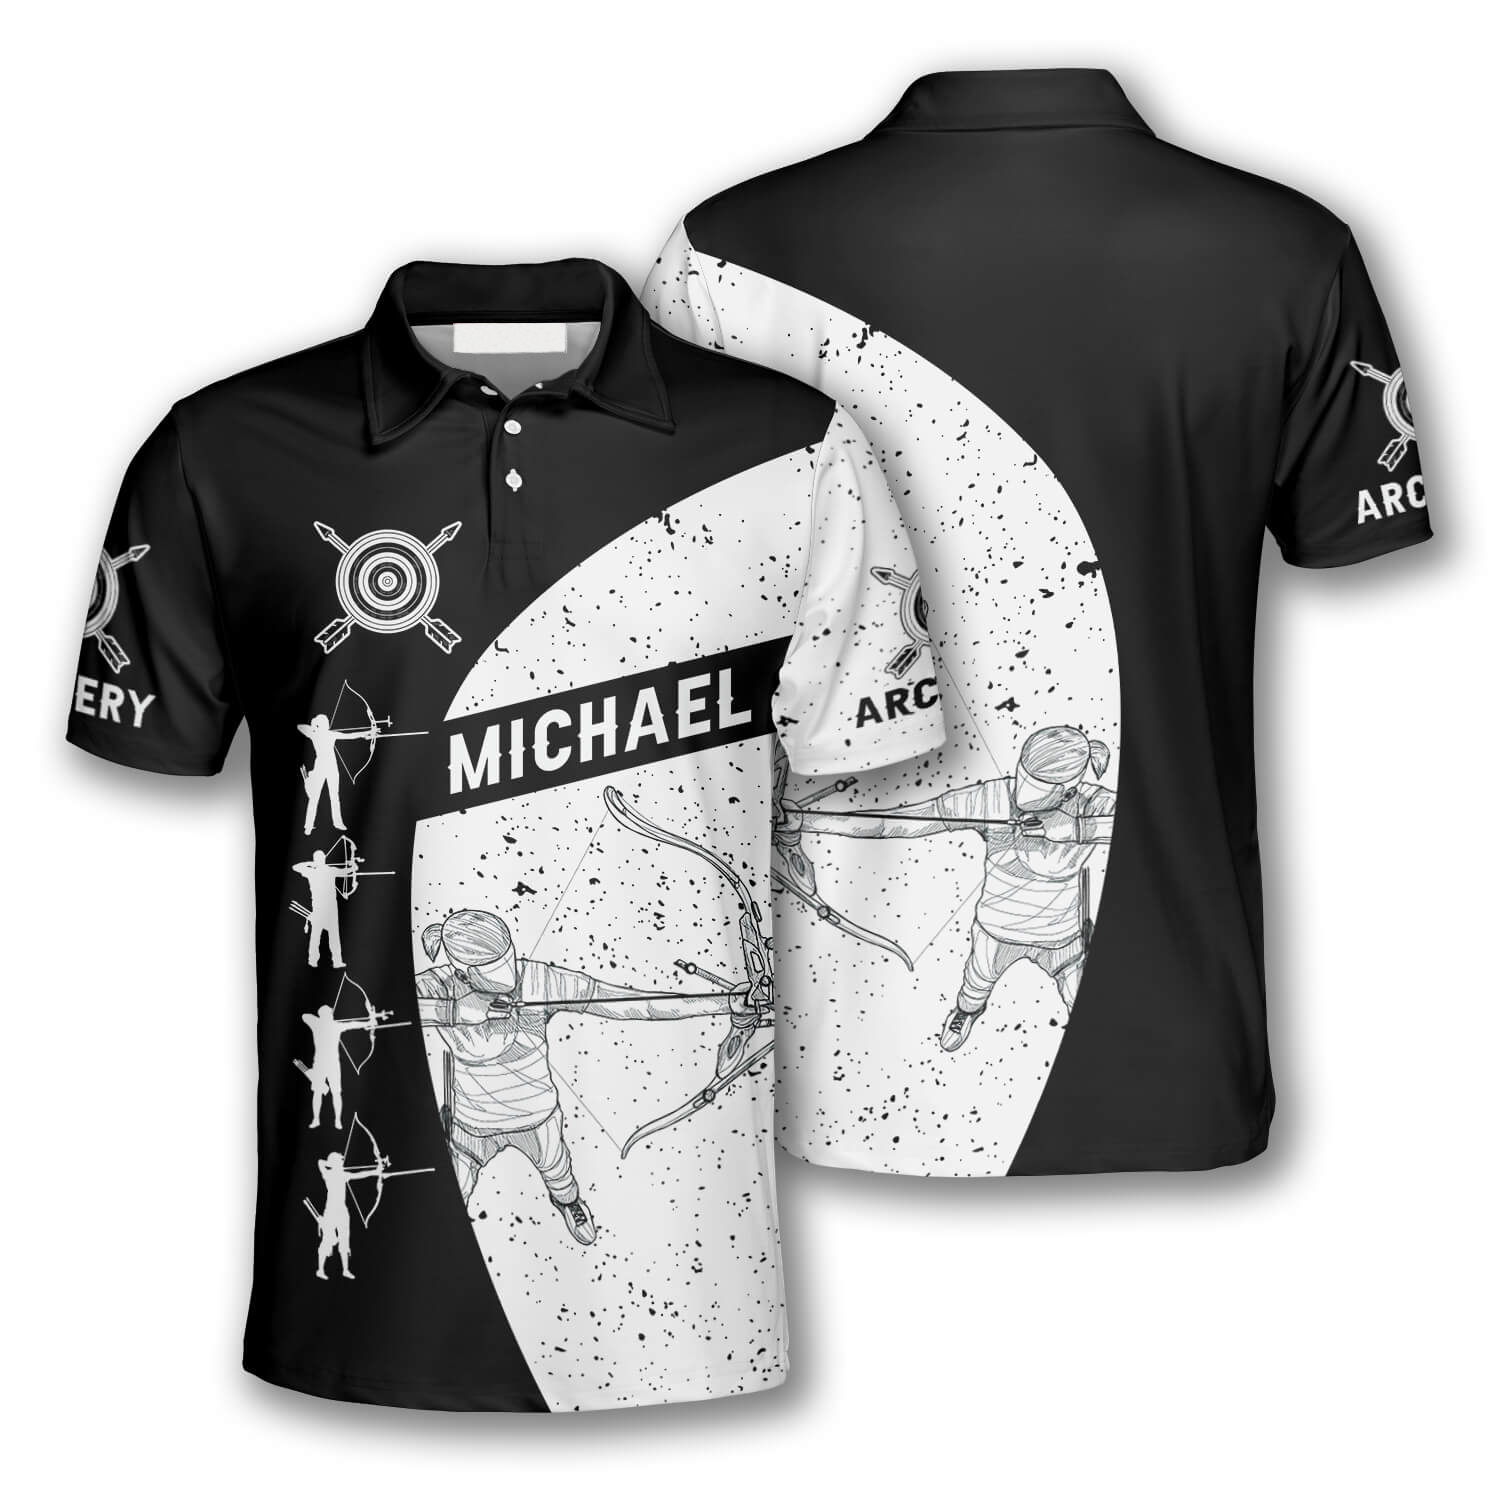 Personalized Archery Silhouettes Black White Version Custom Archery Polo Shirts for Men